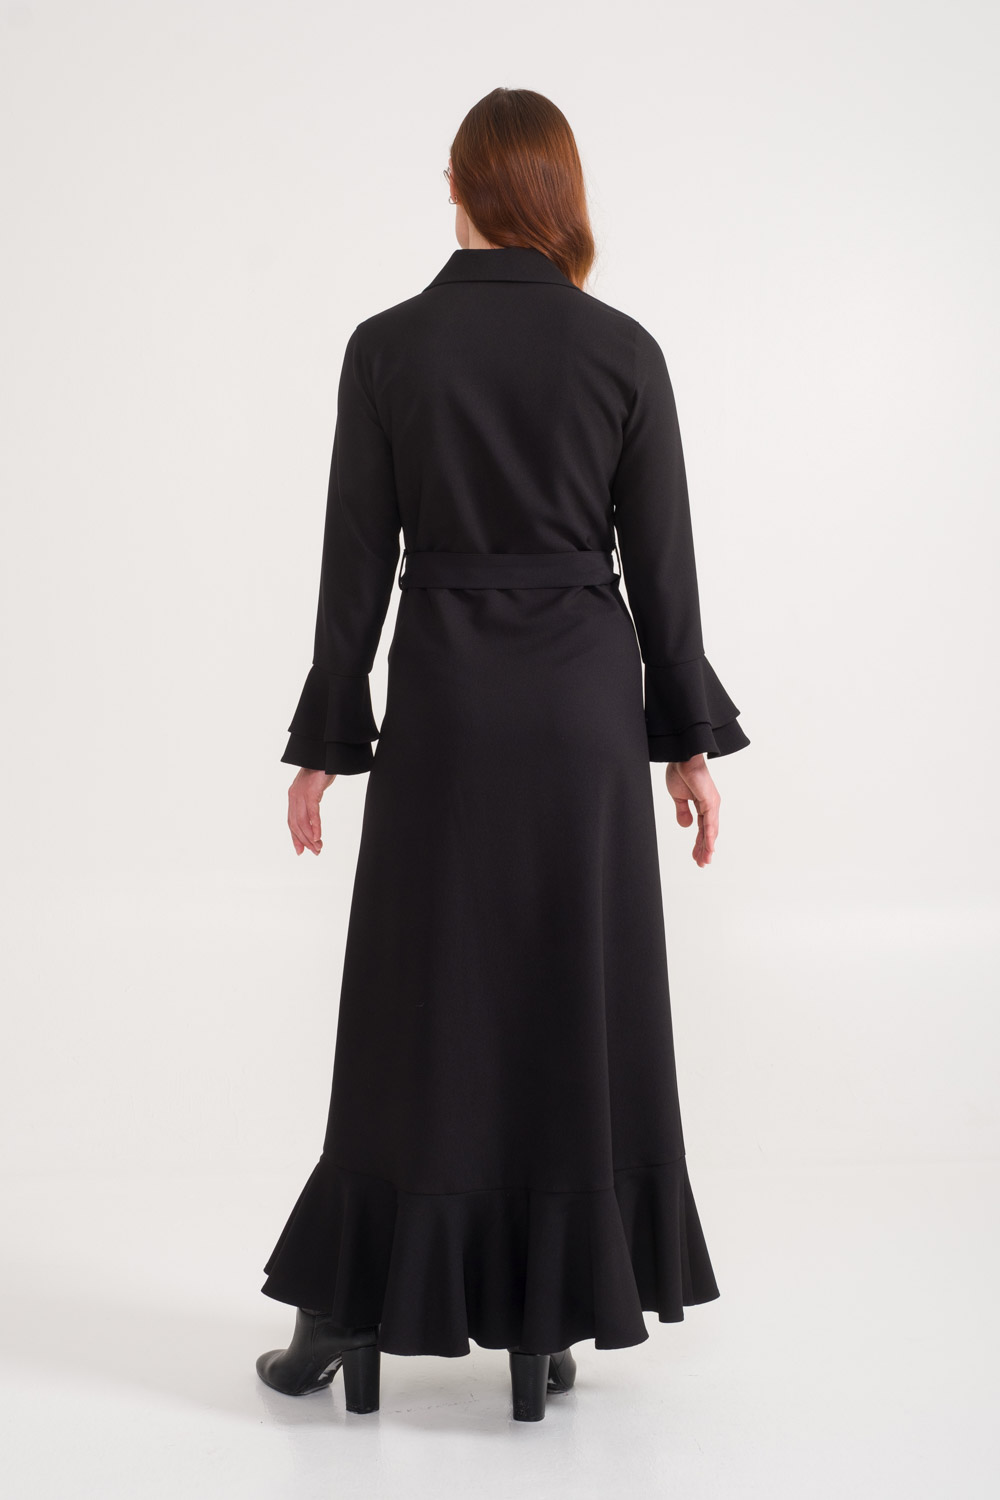 Flywheel Sleeve Black Dress with Collars